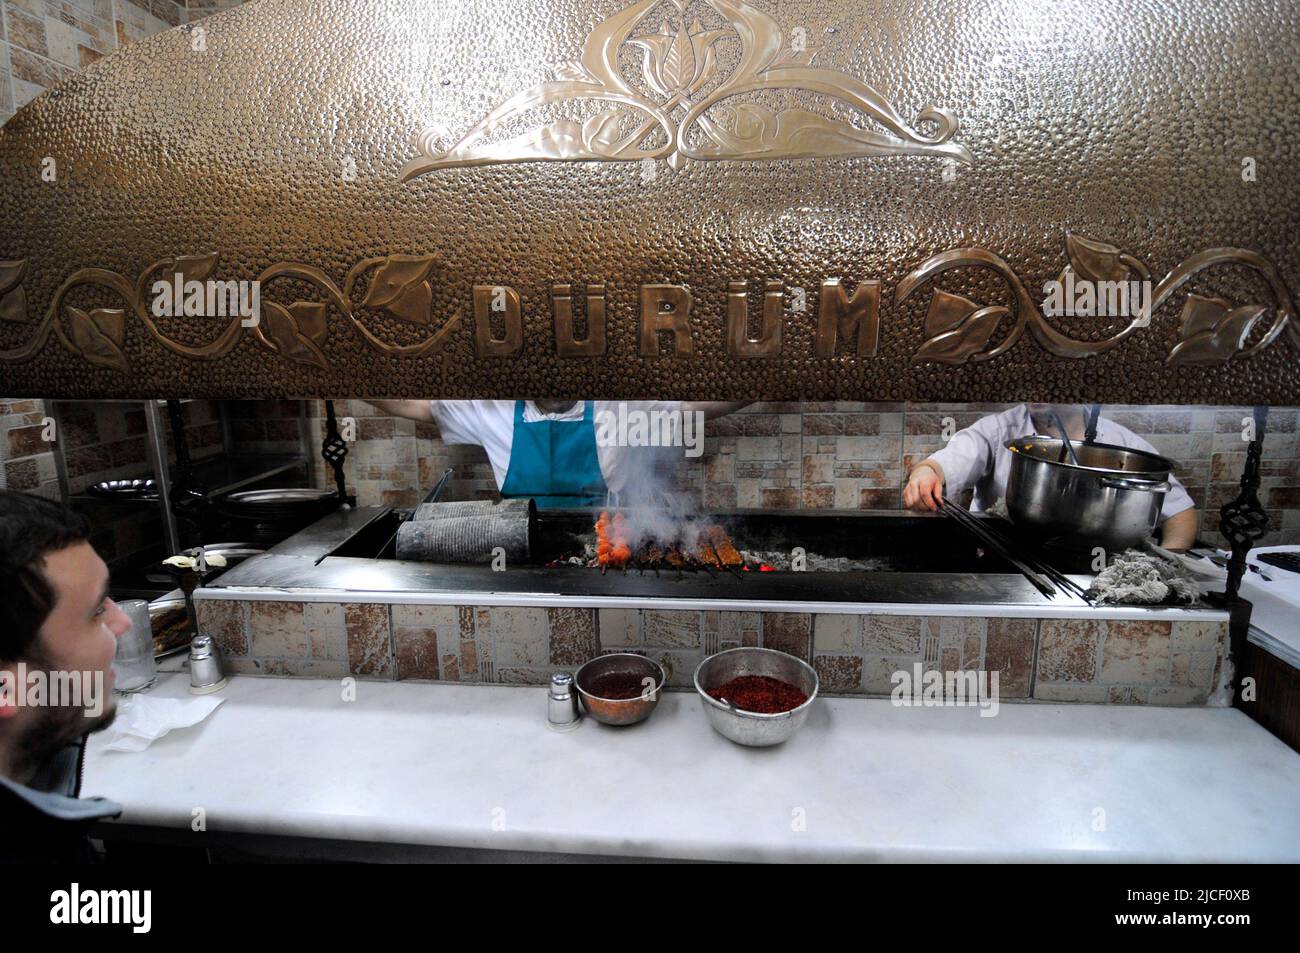 Durum Bufe BBQ restaurant on Rüstem Paşa. Istanbul, Turkey. Stock Photo